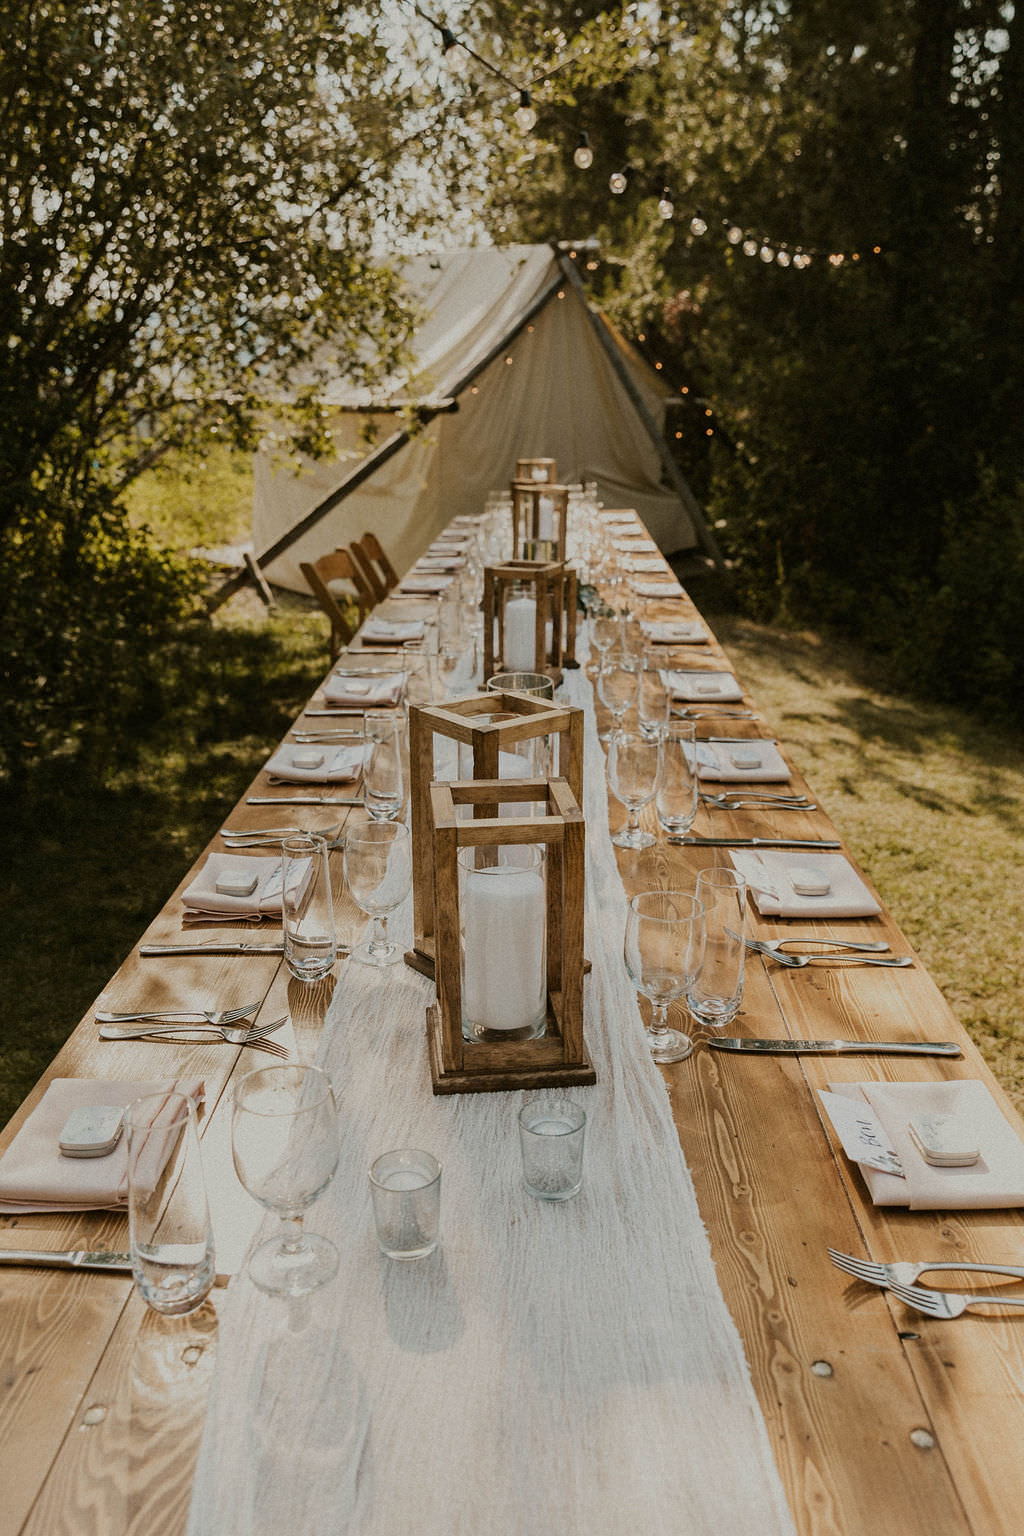 Outdoor wedding table setup using wooden lanterns as simple wedding decor